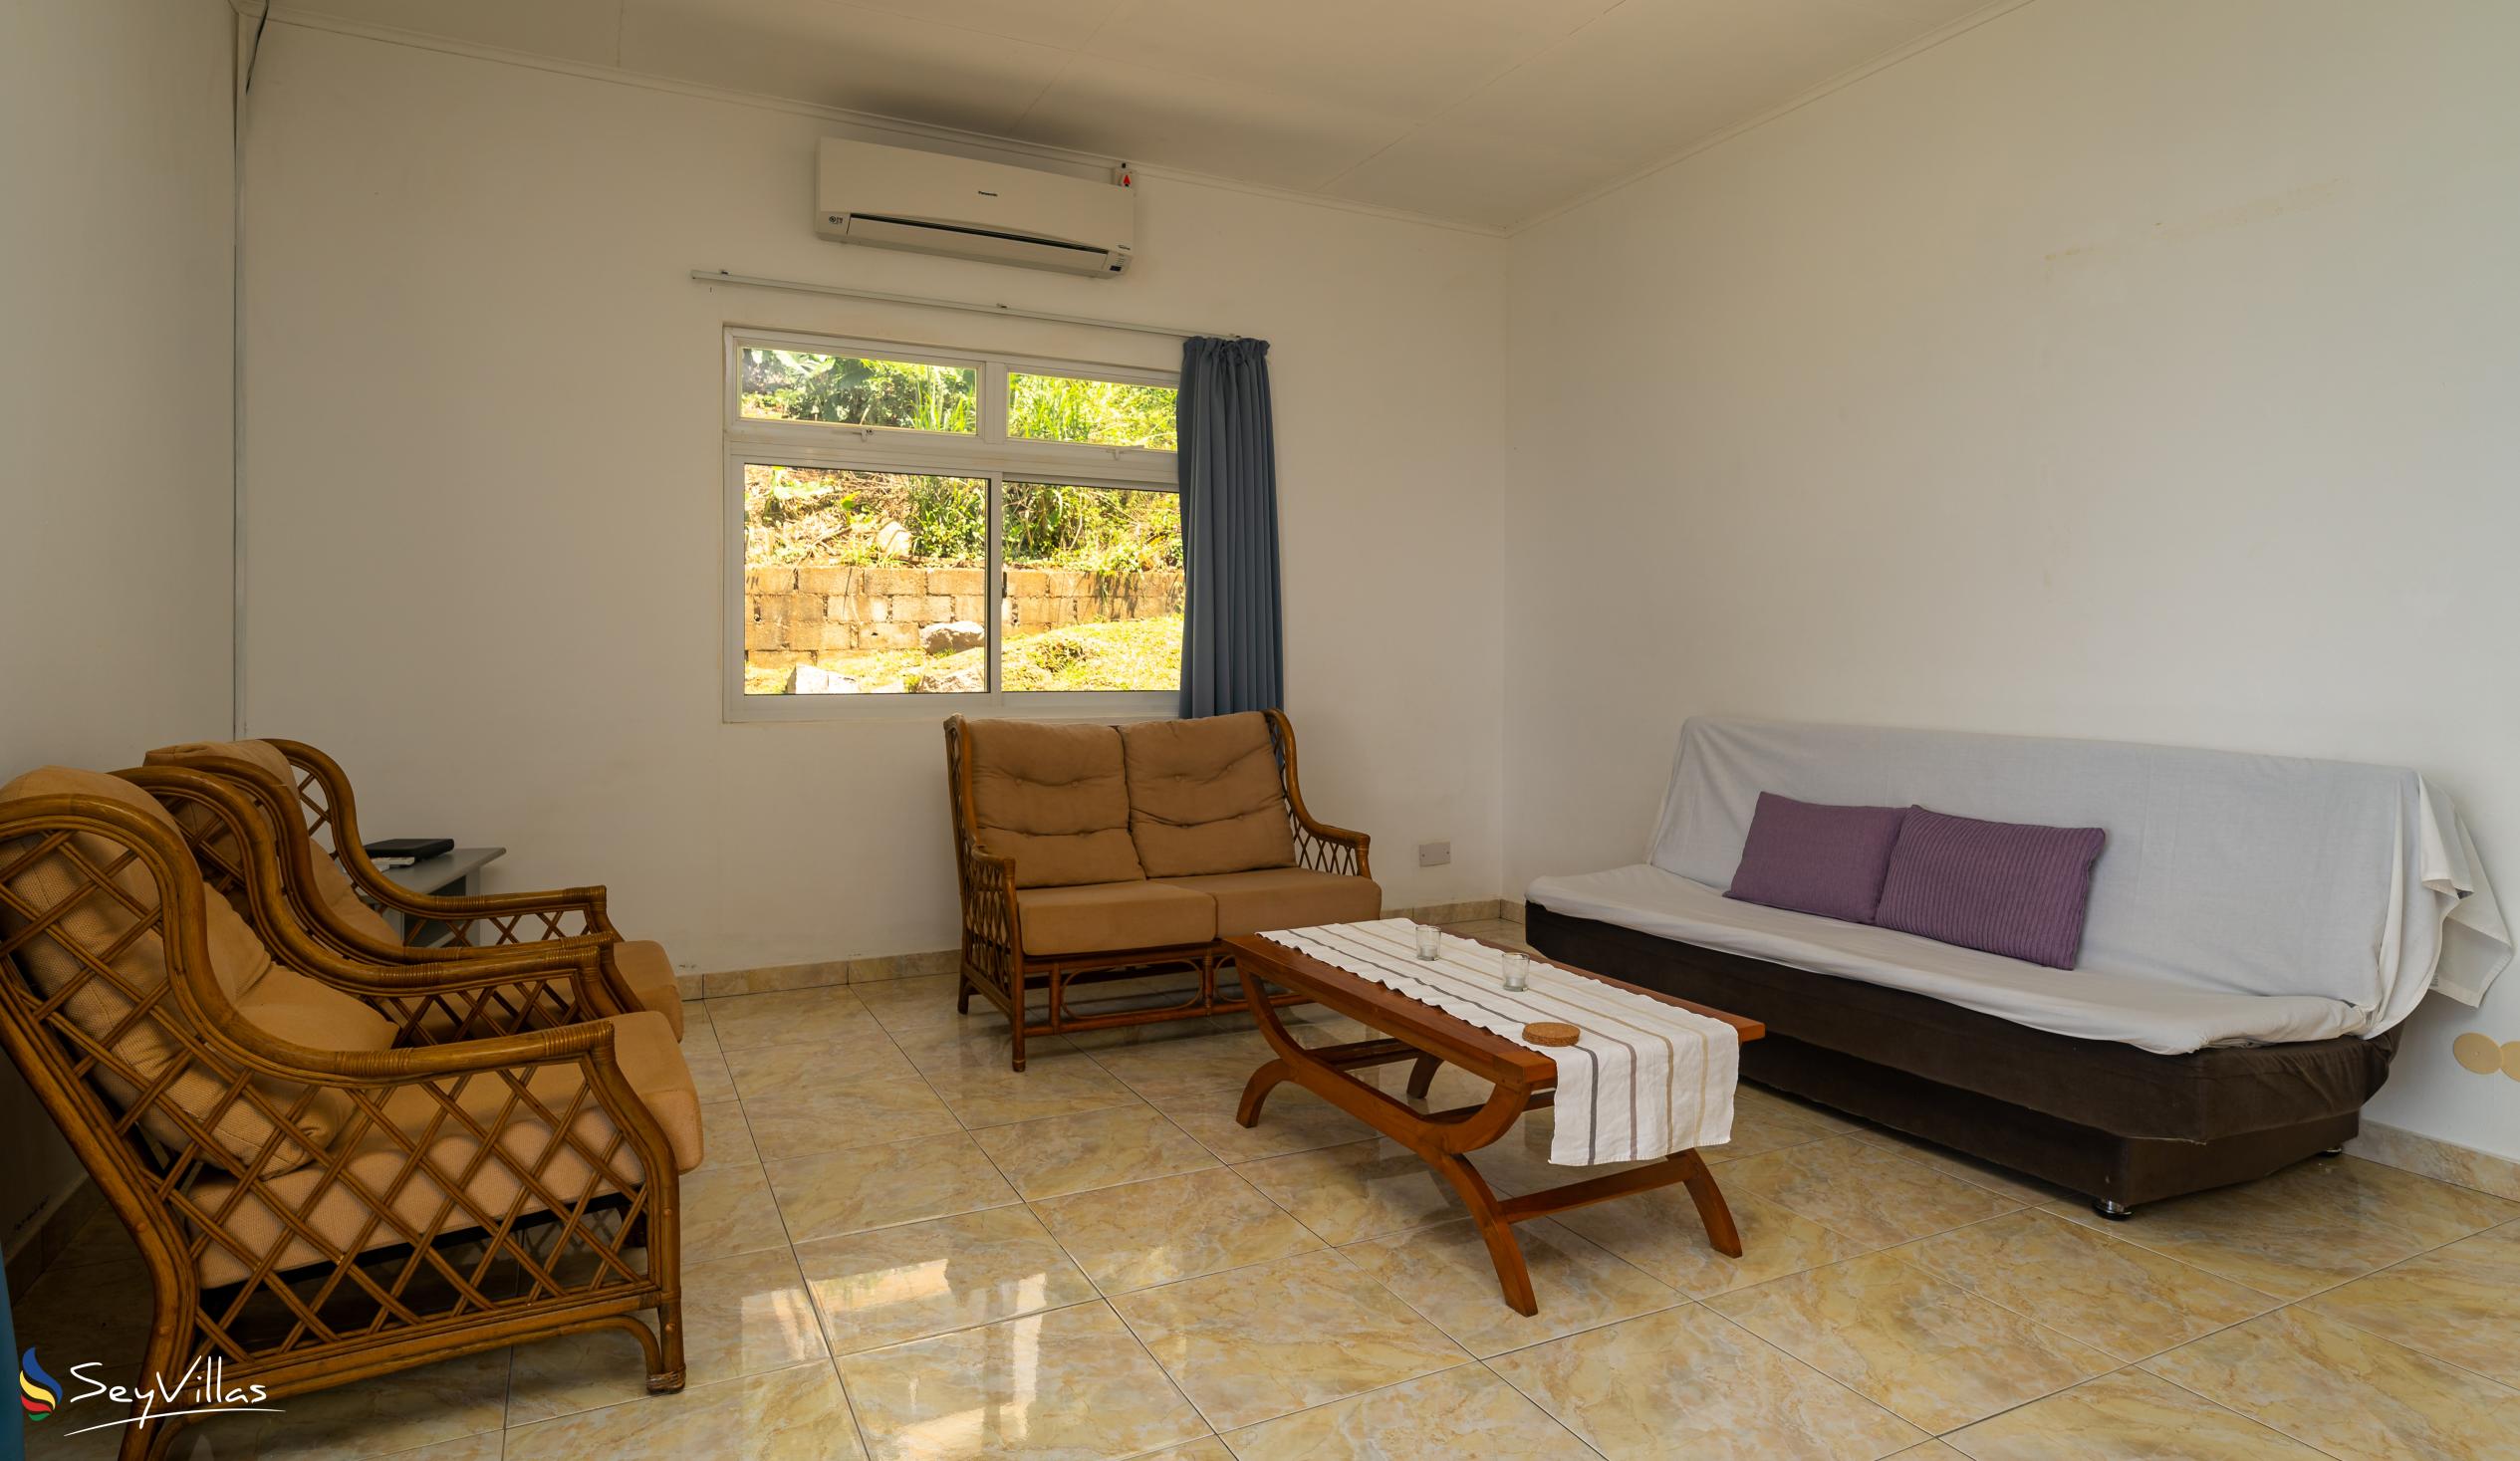 Photo 76: Maison Marikel - 2-Bedroom Villa - Mahé (Seychelles)